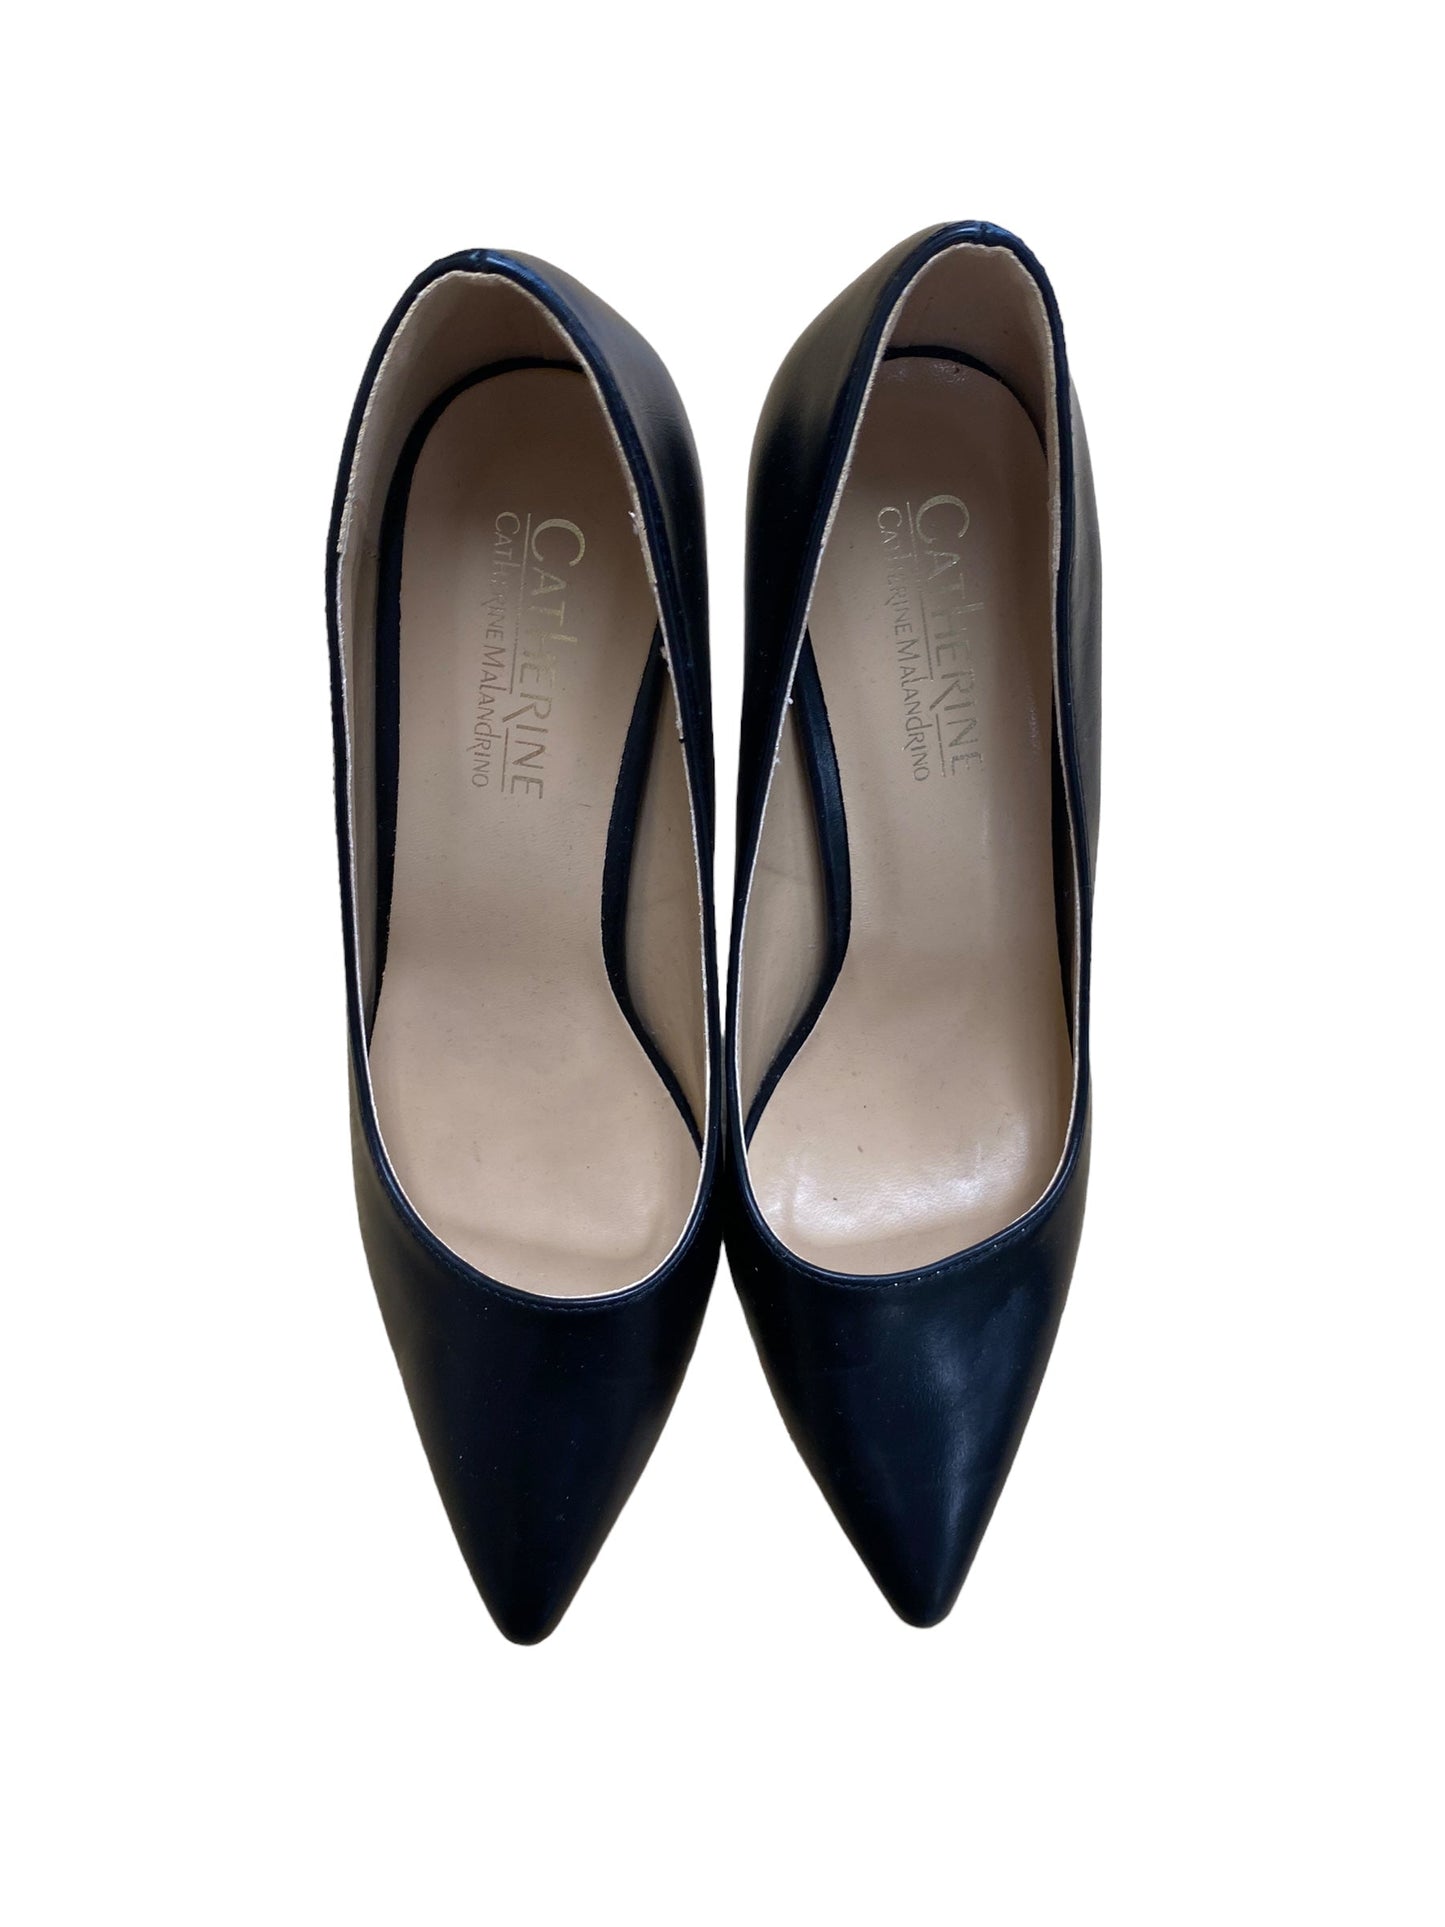 Black Shoes Heels Block Catherine Malandrino, Size 9